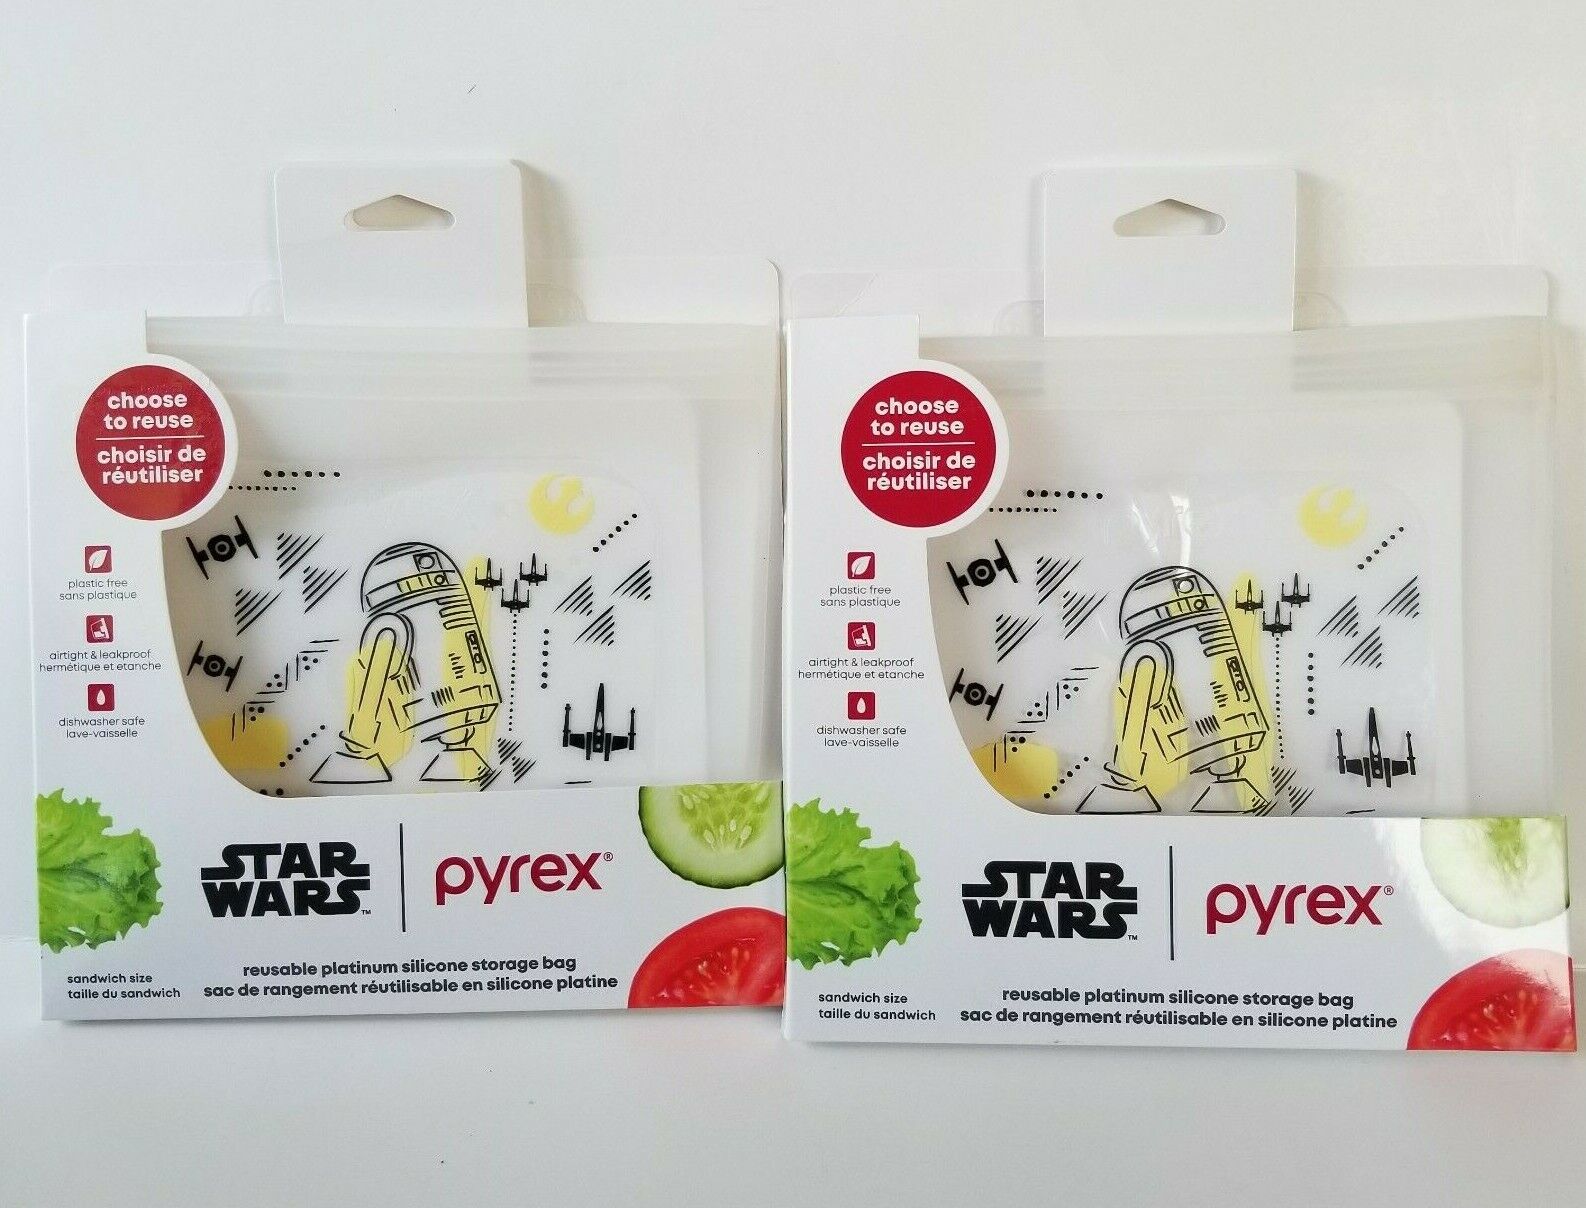 Star Wars Pyrex Platinum Silicone Storage Bags Sandwich Size R...